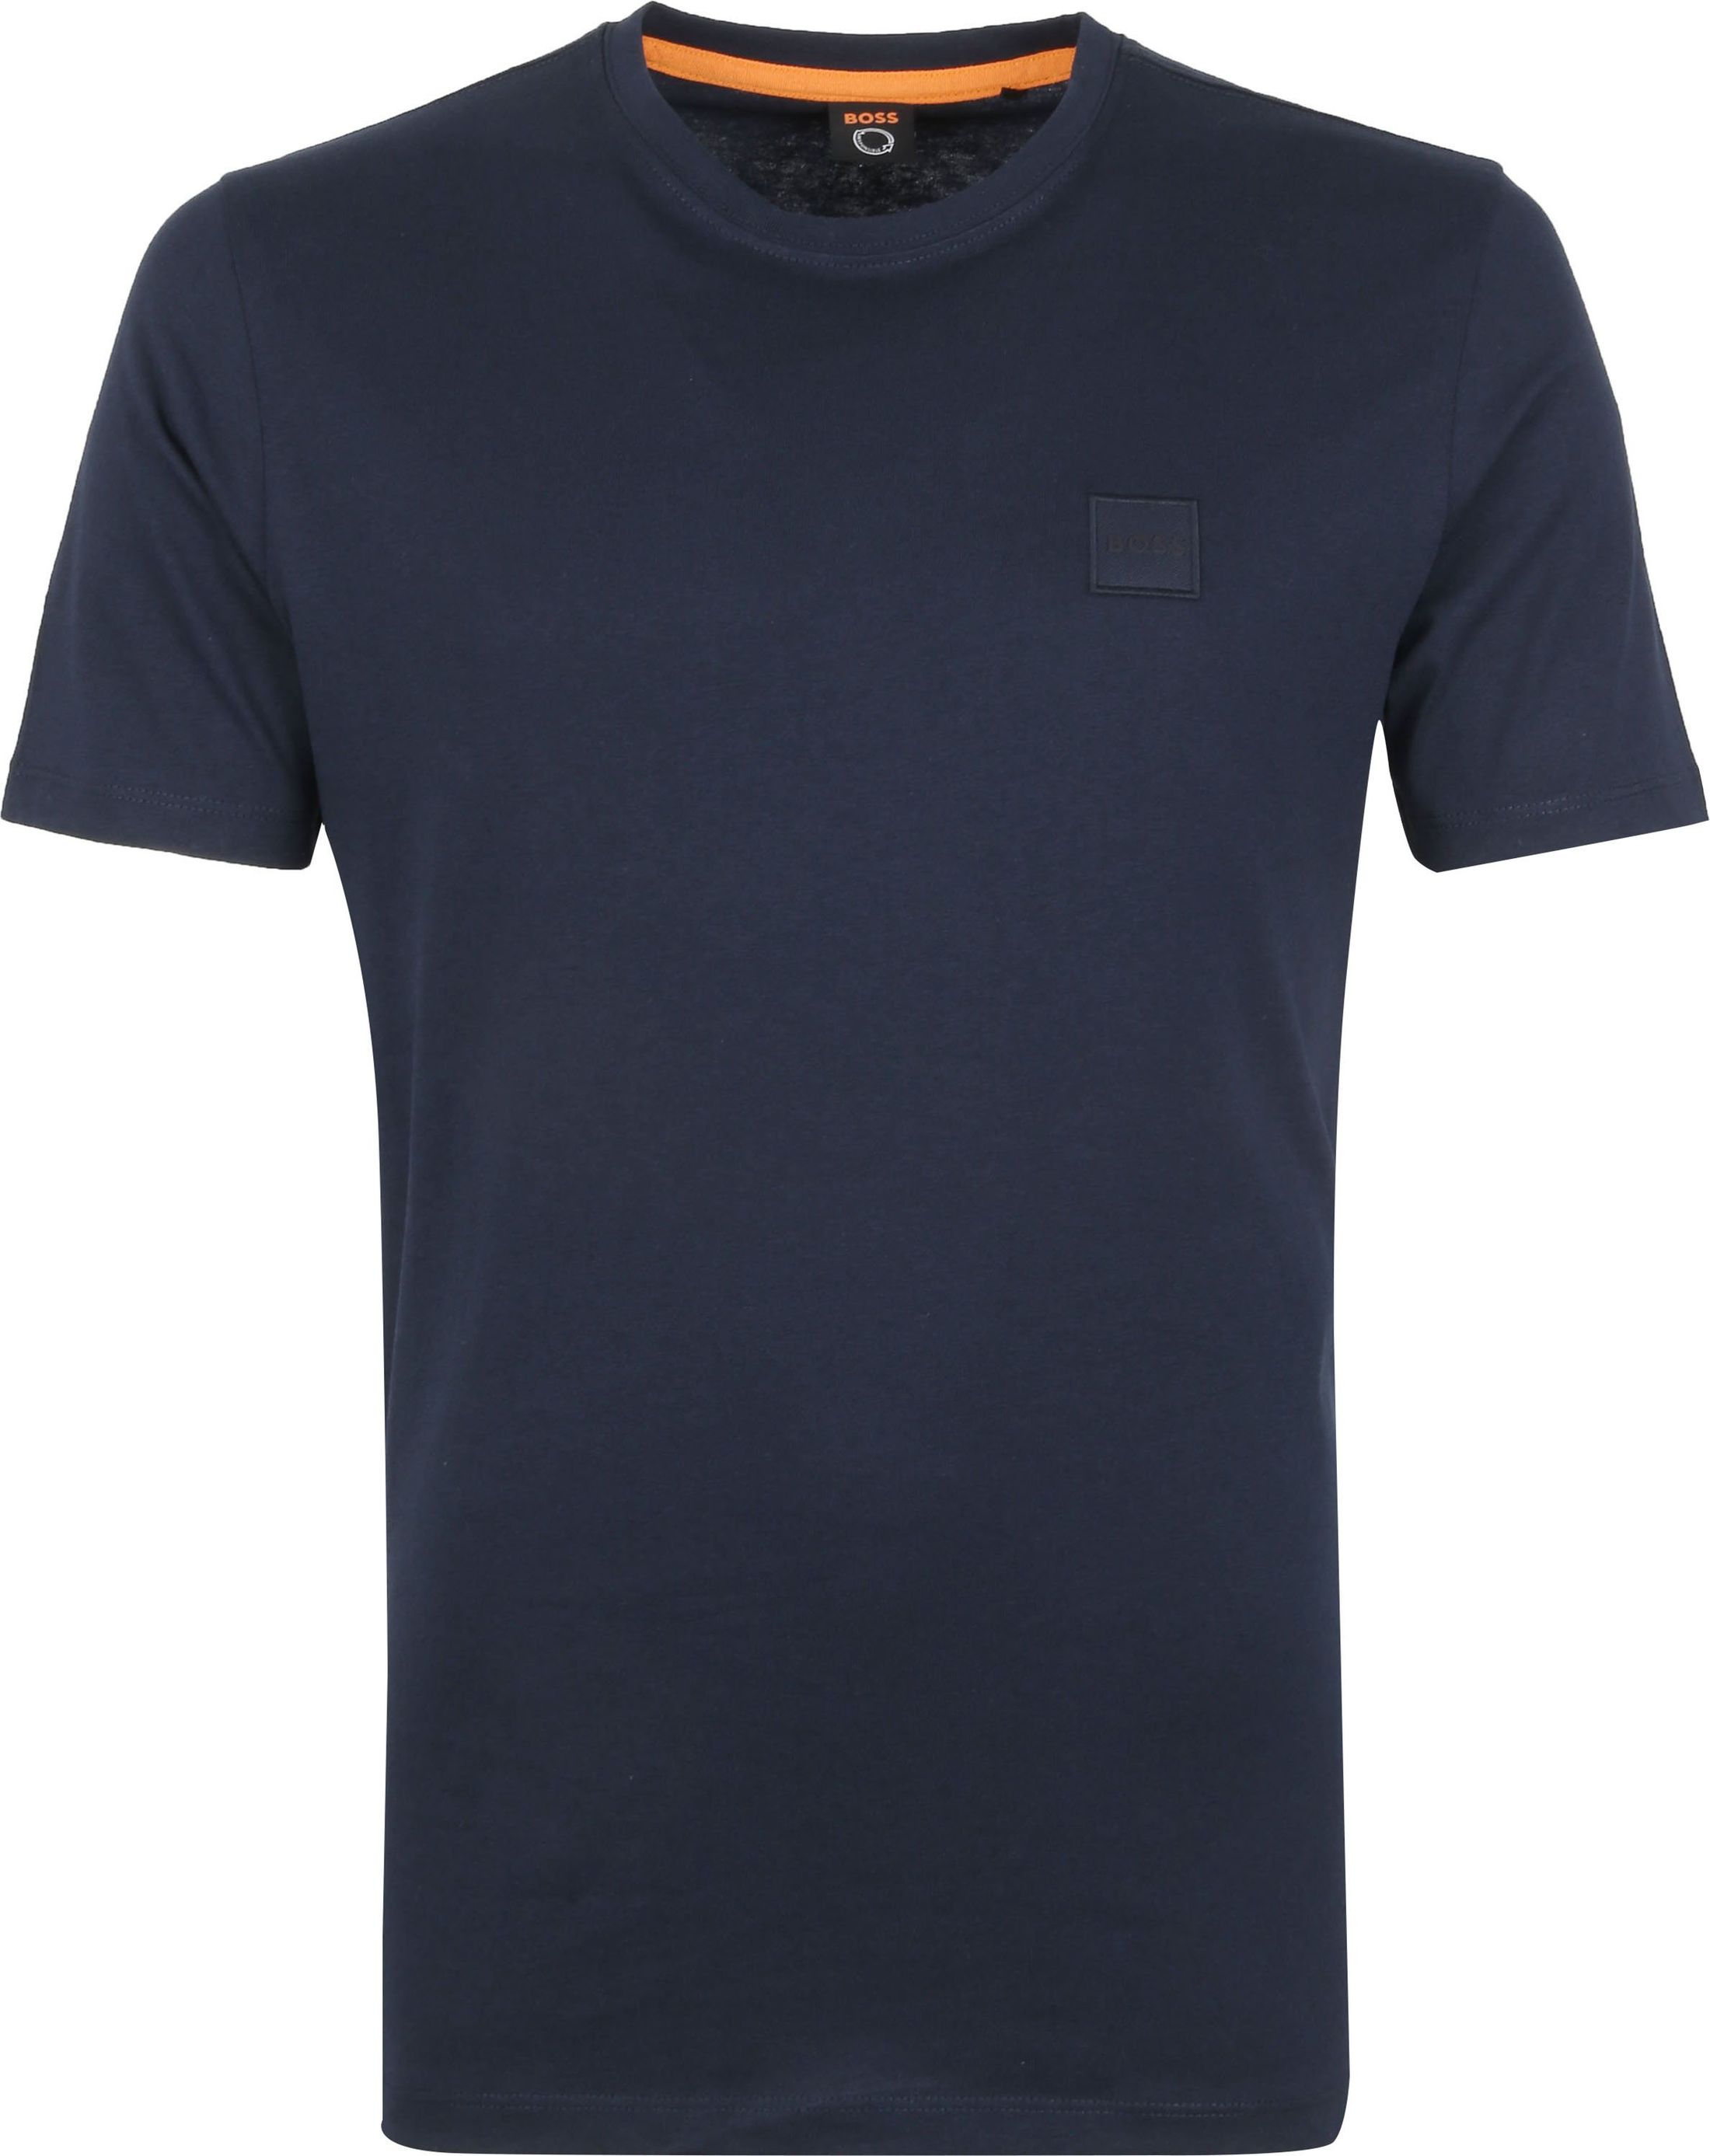 Hugo Boss T Shirt Tales Responsible Navy Blue Dark Blue size S